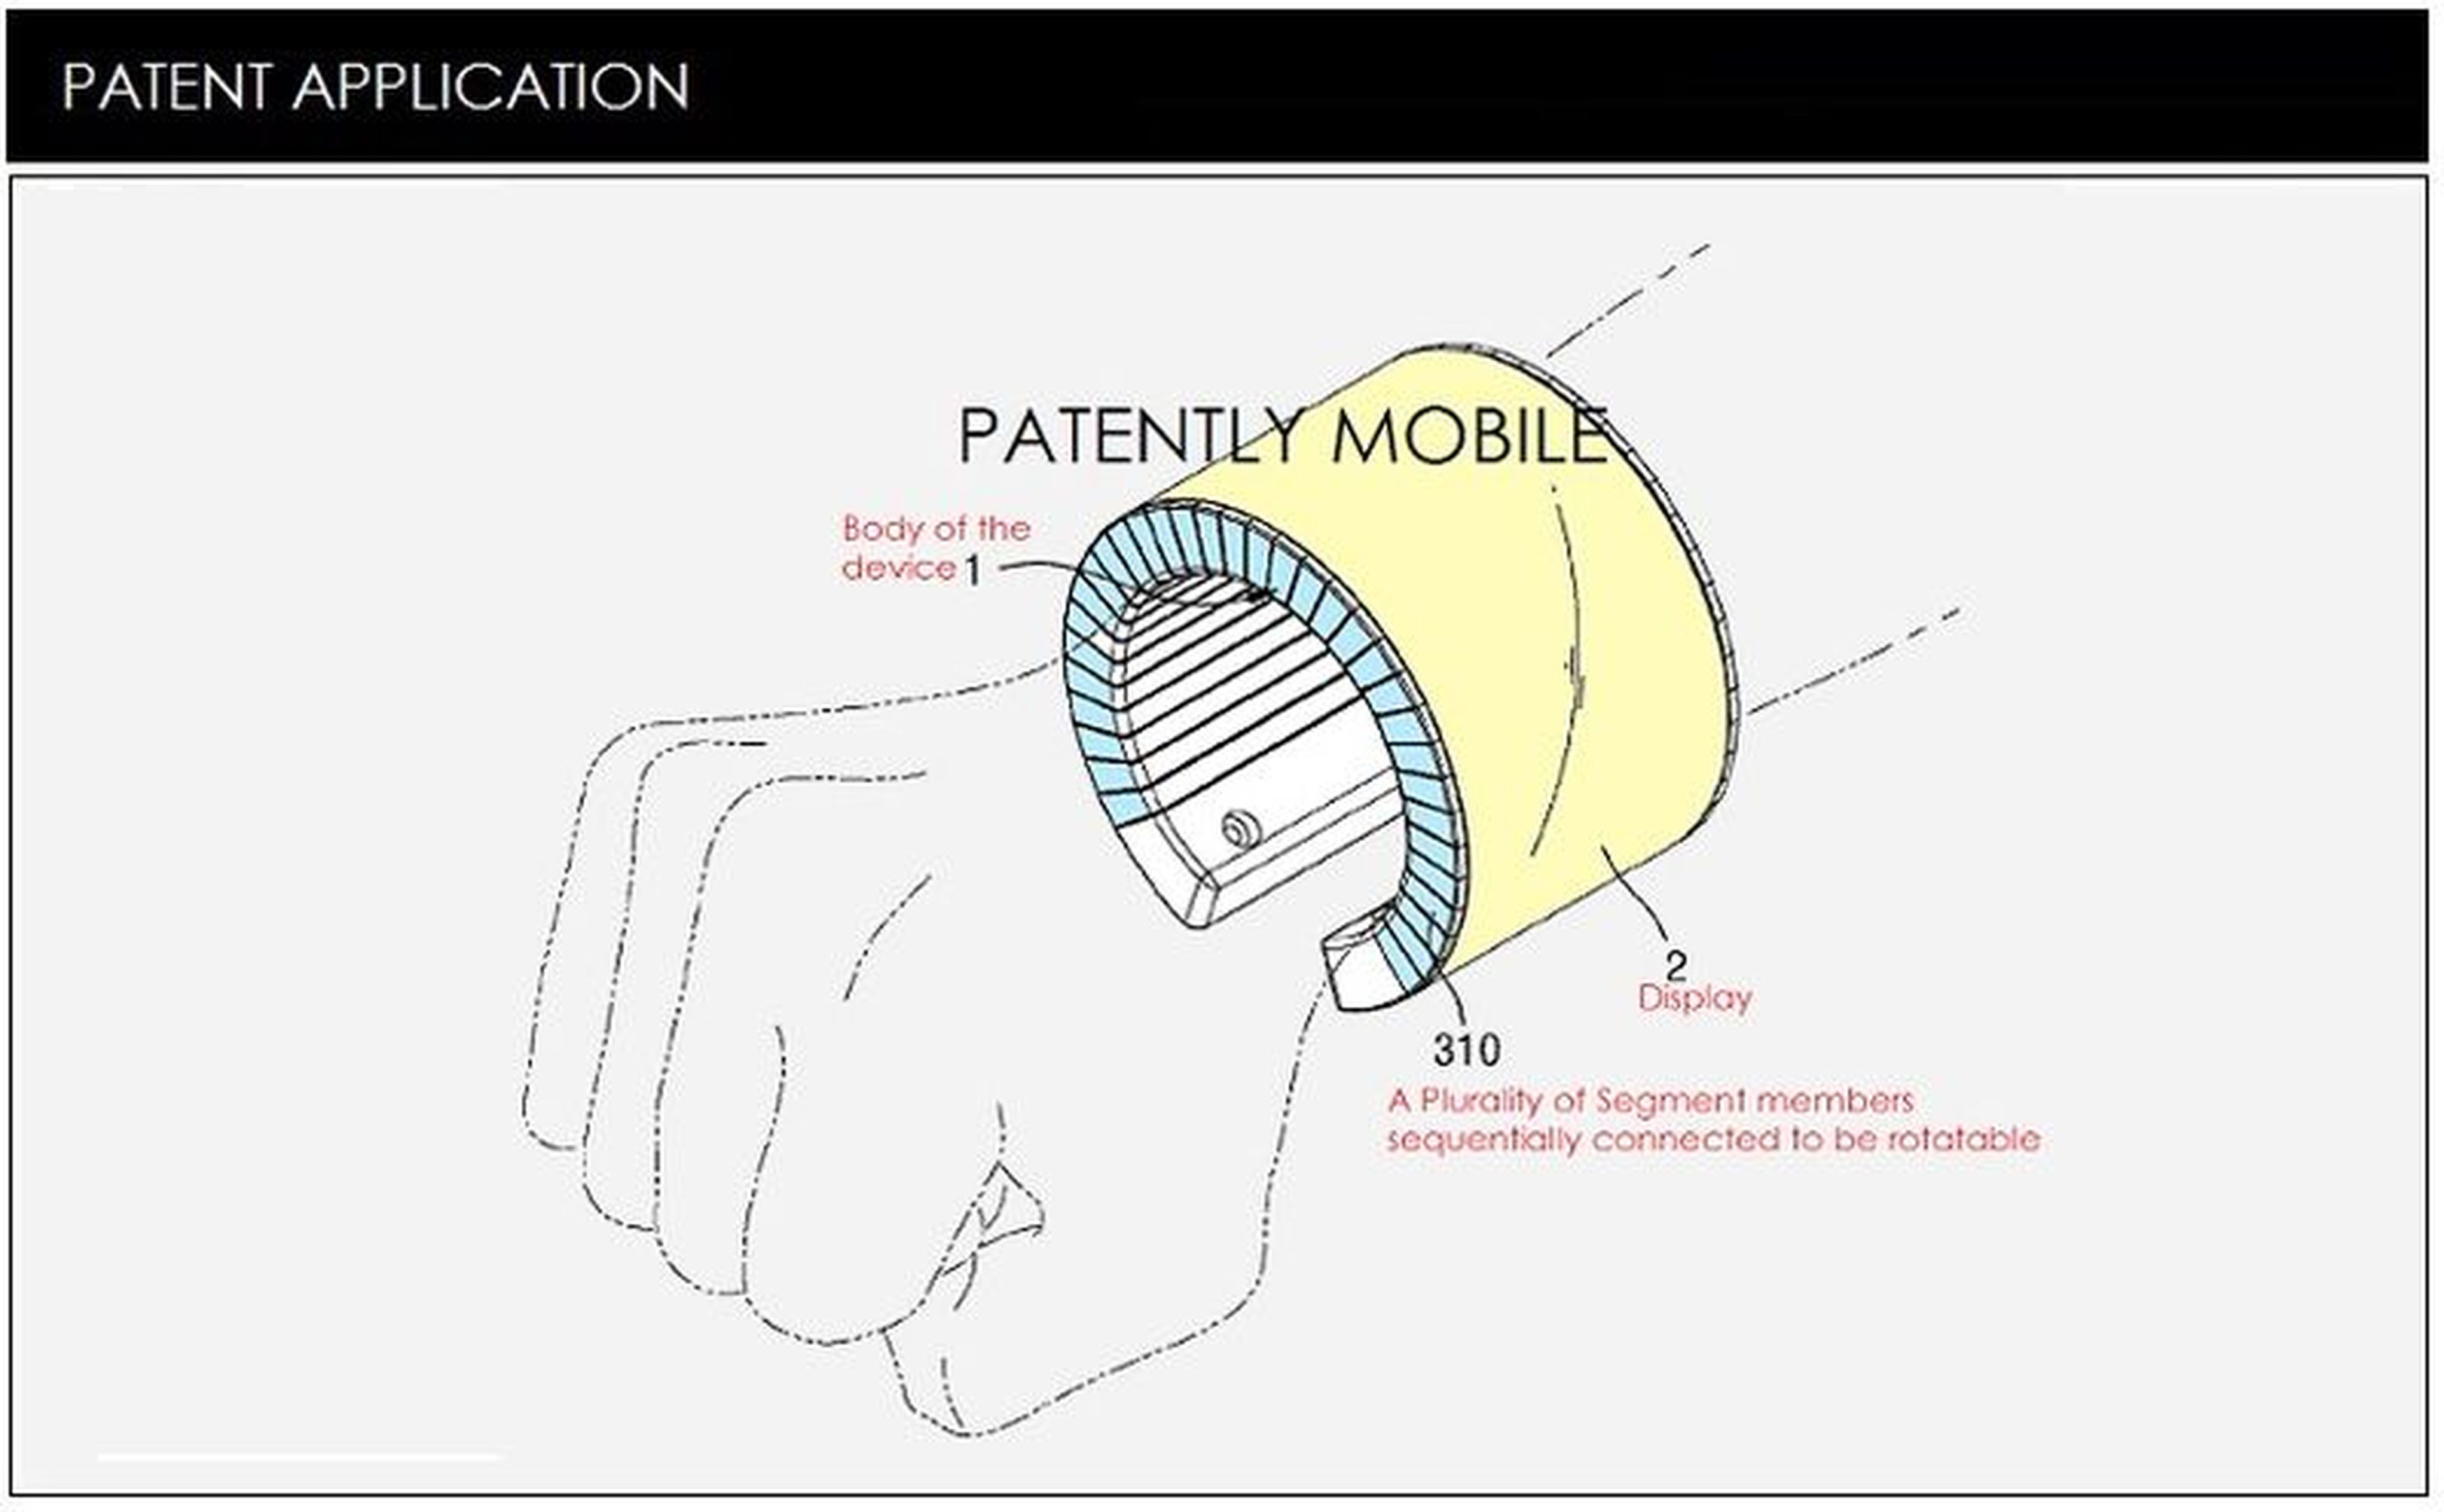 Samsung patenta smartwatches con pantallas flexibles